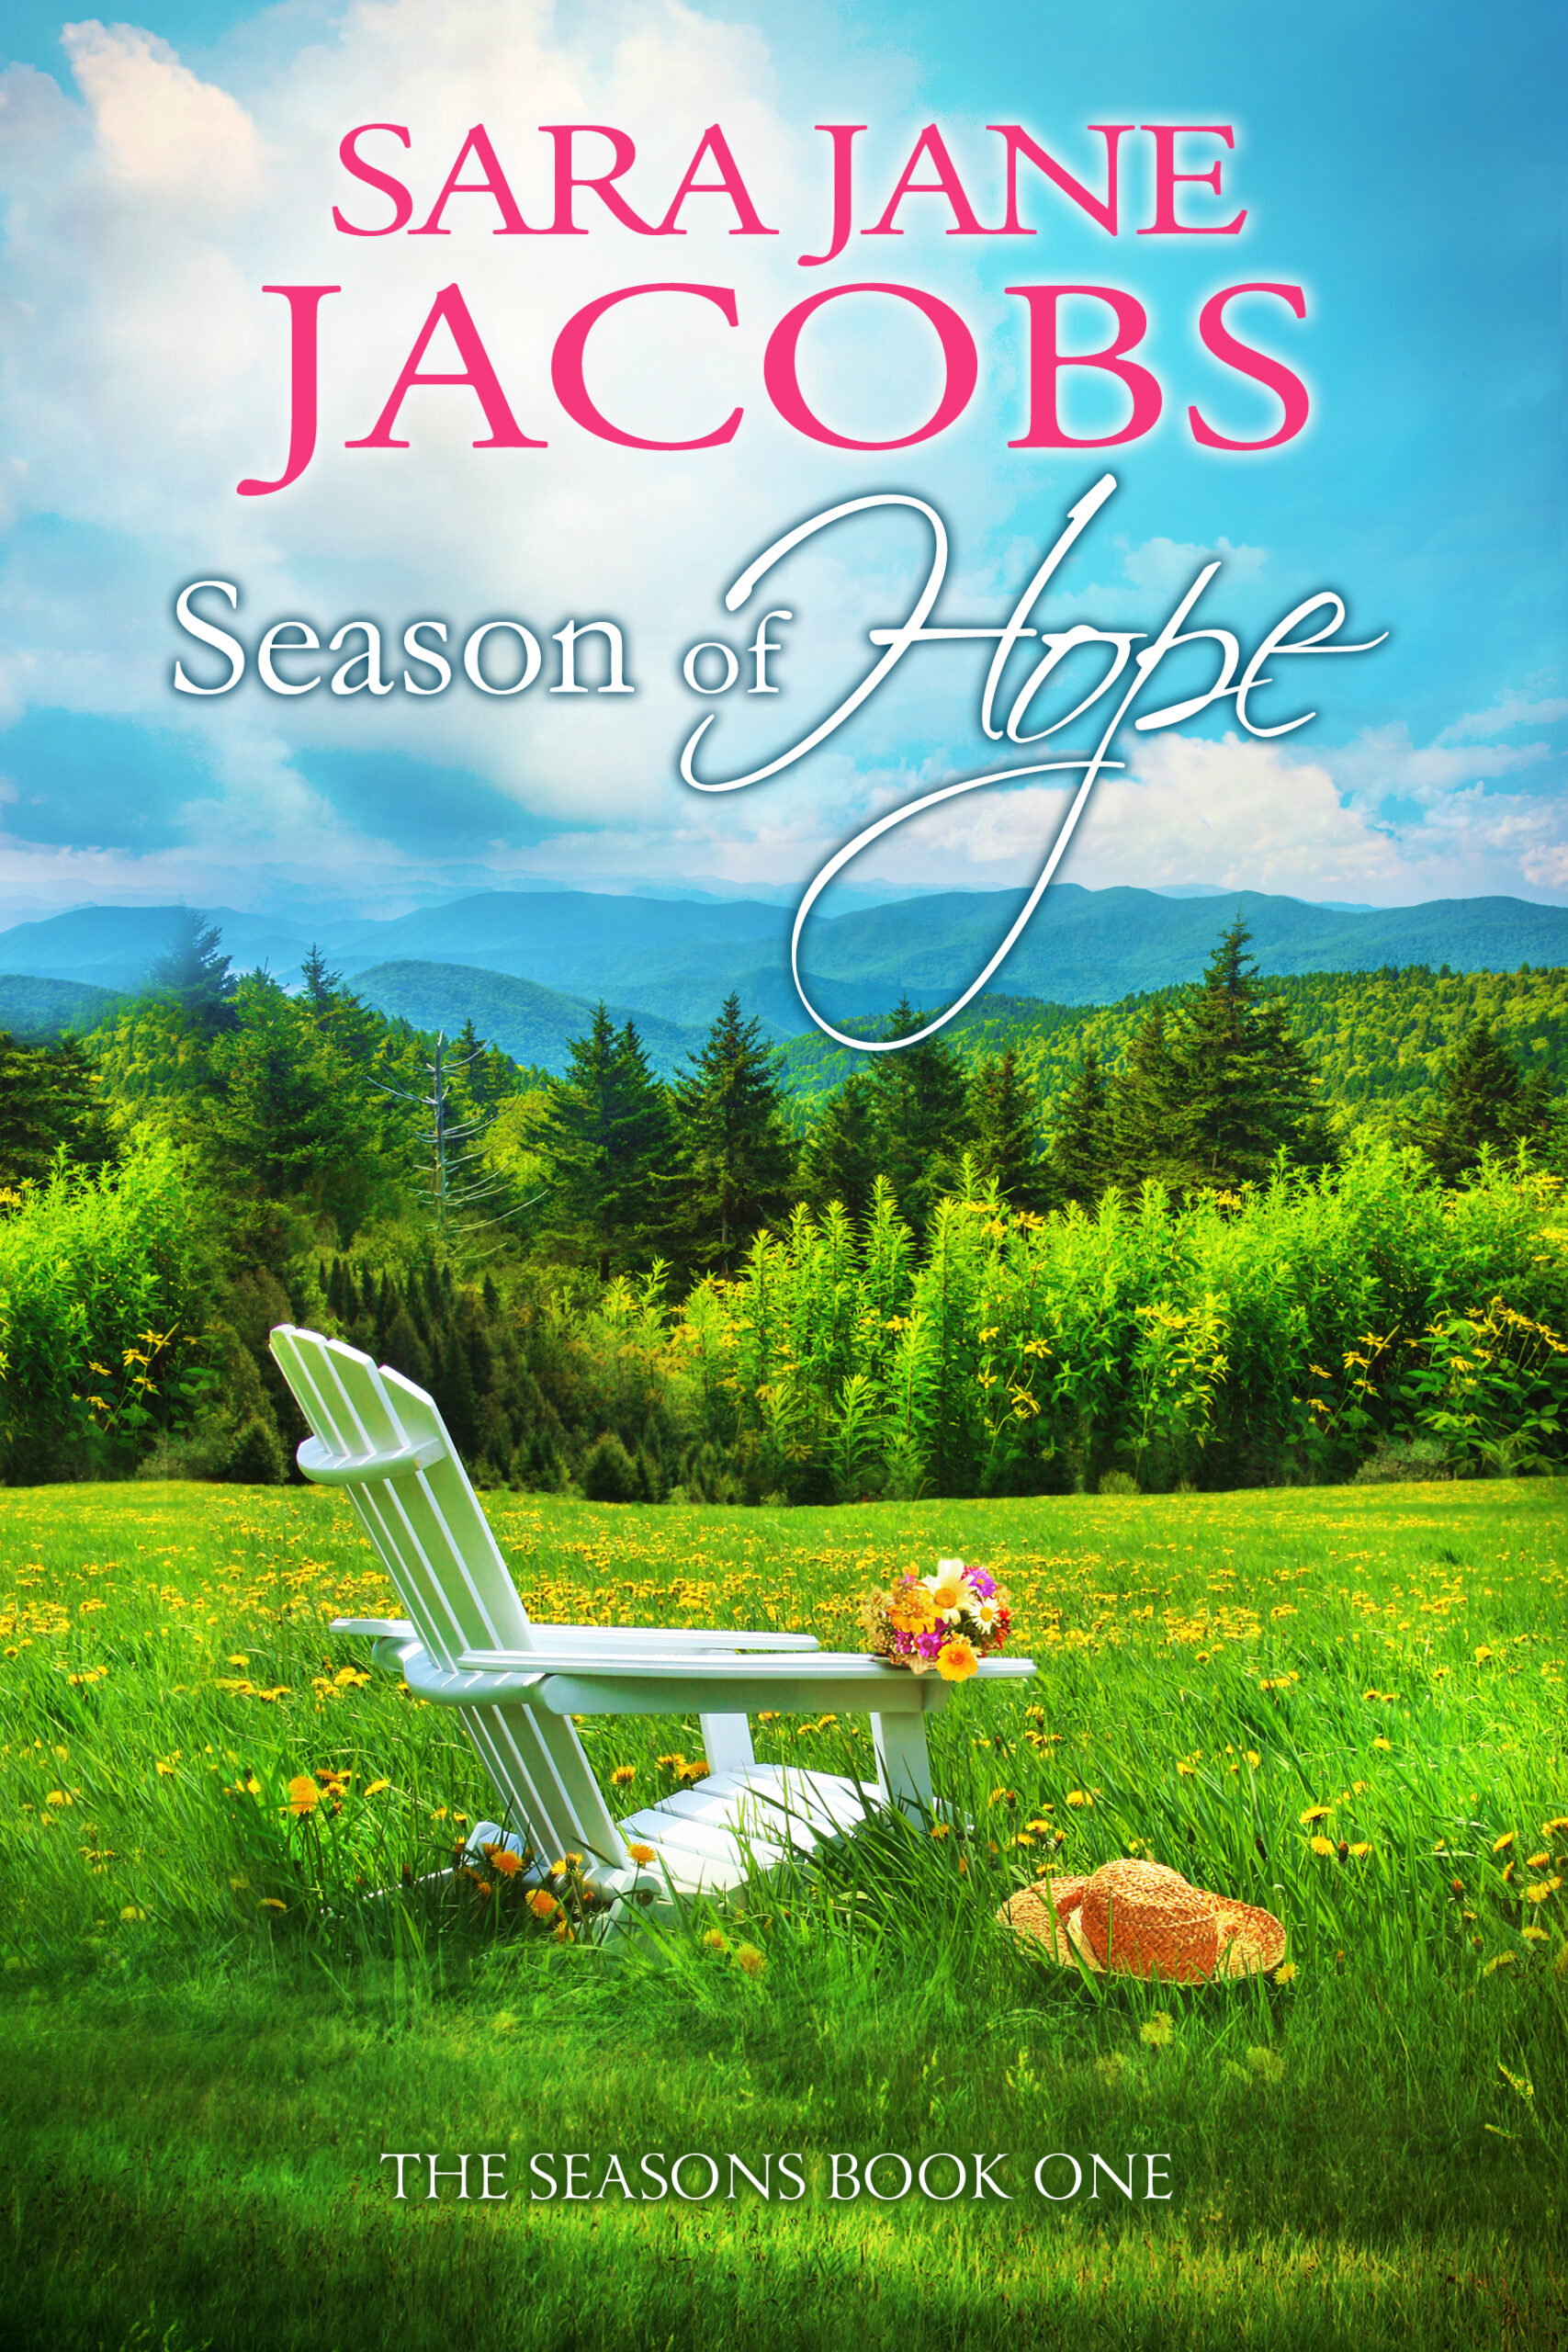 FREE: Season of Hope by Sara Jane Jacobs